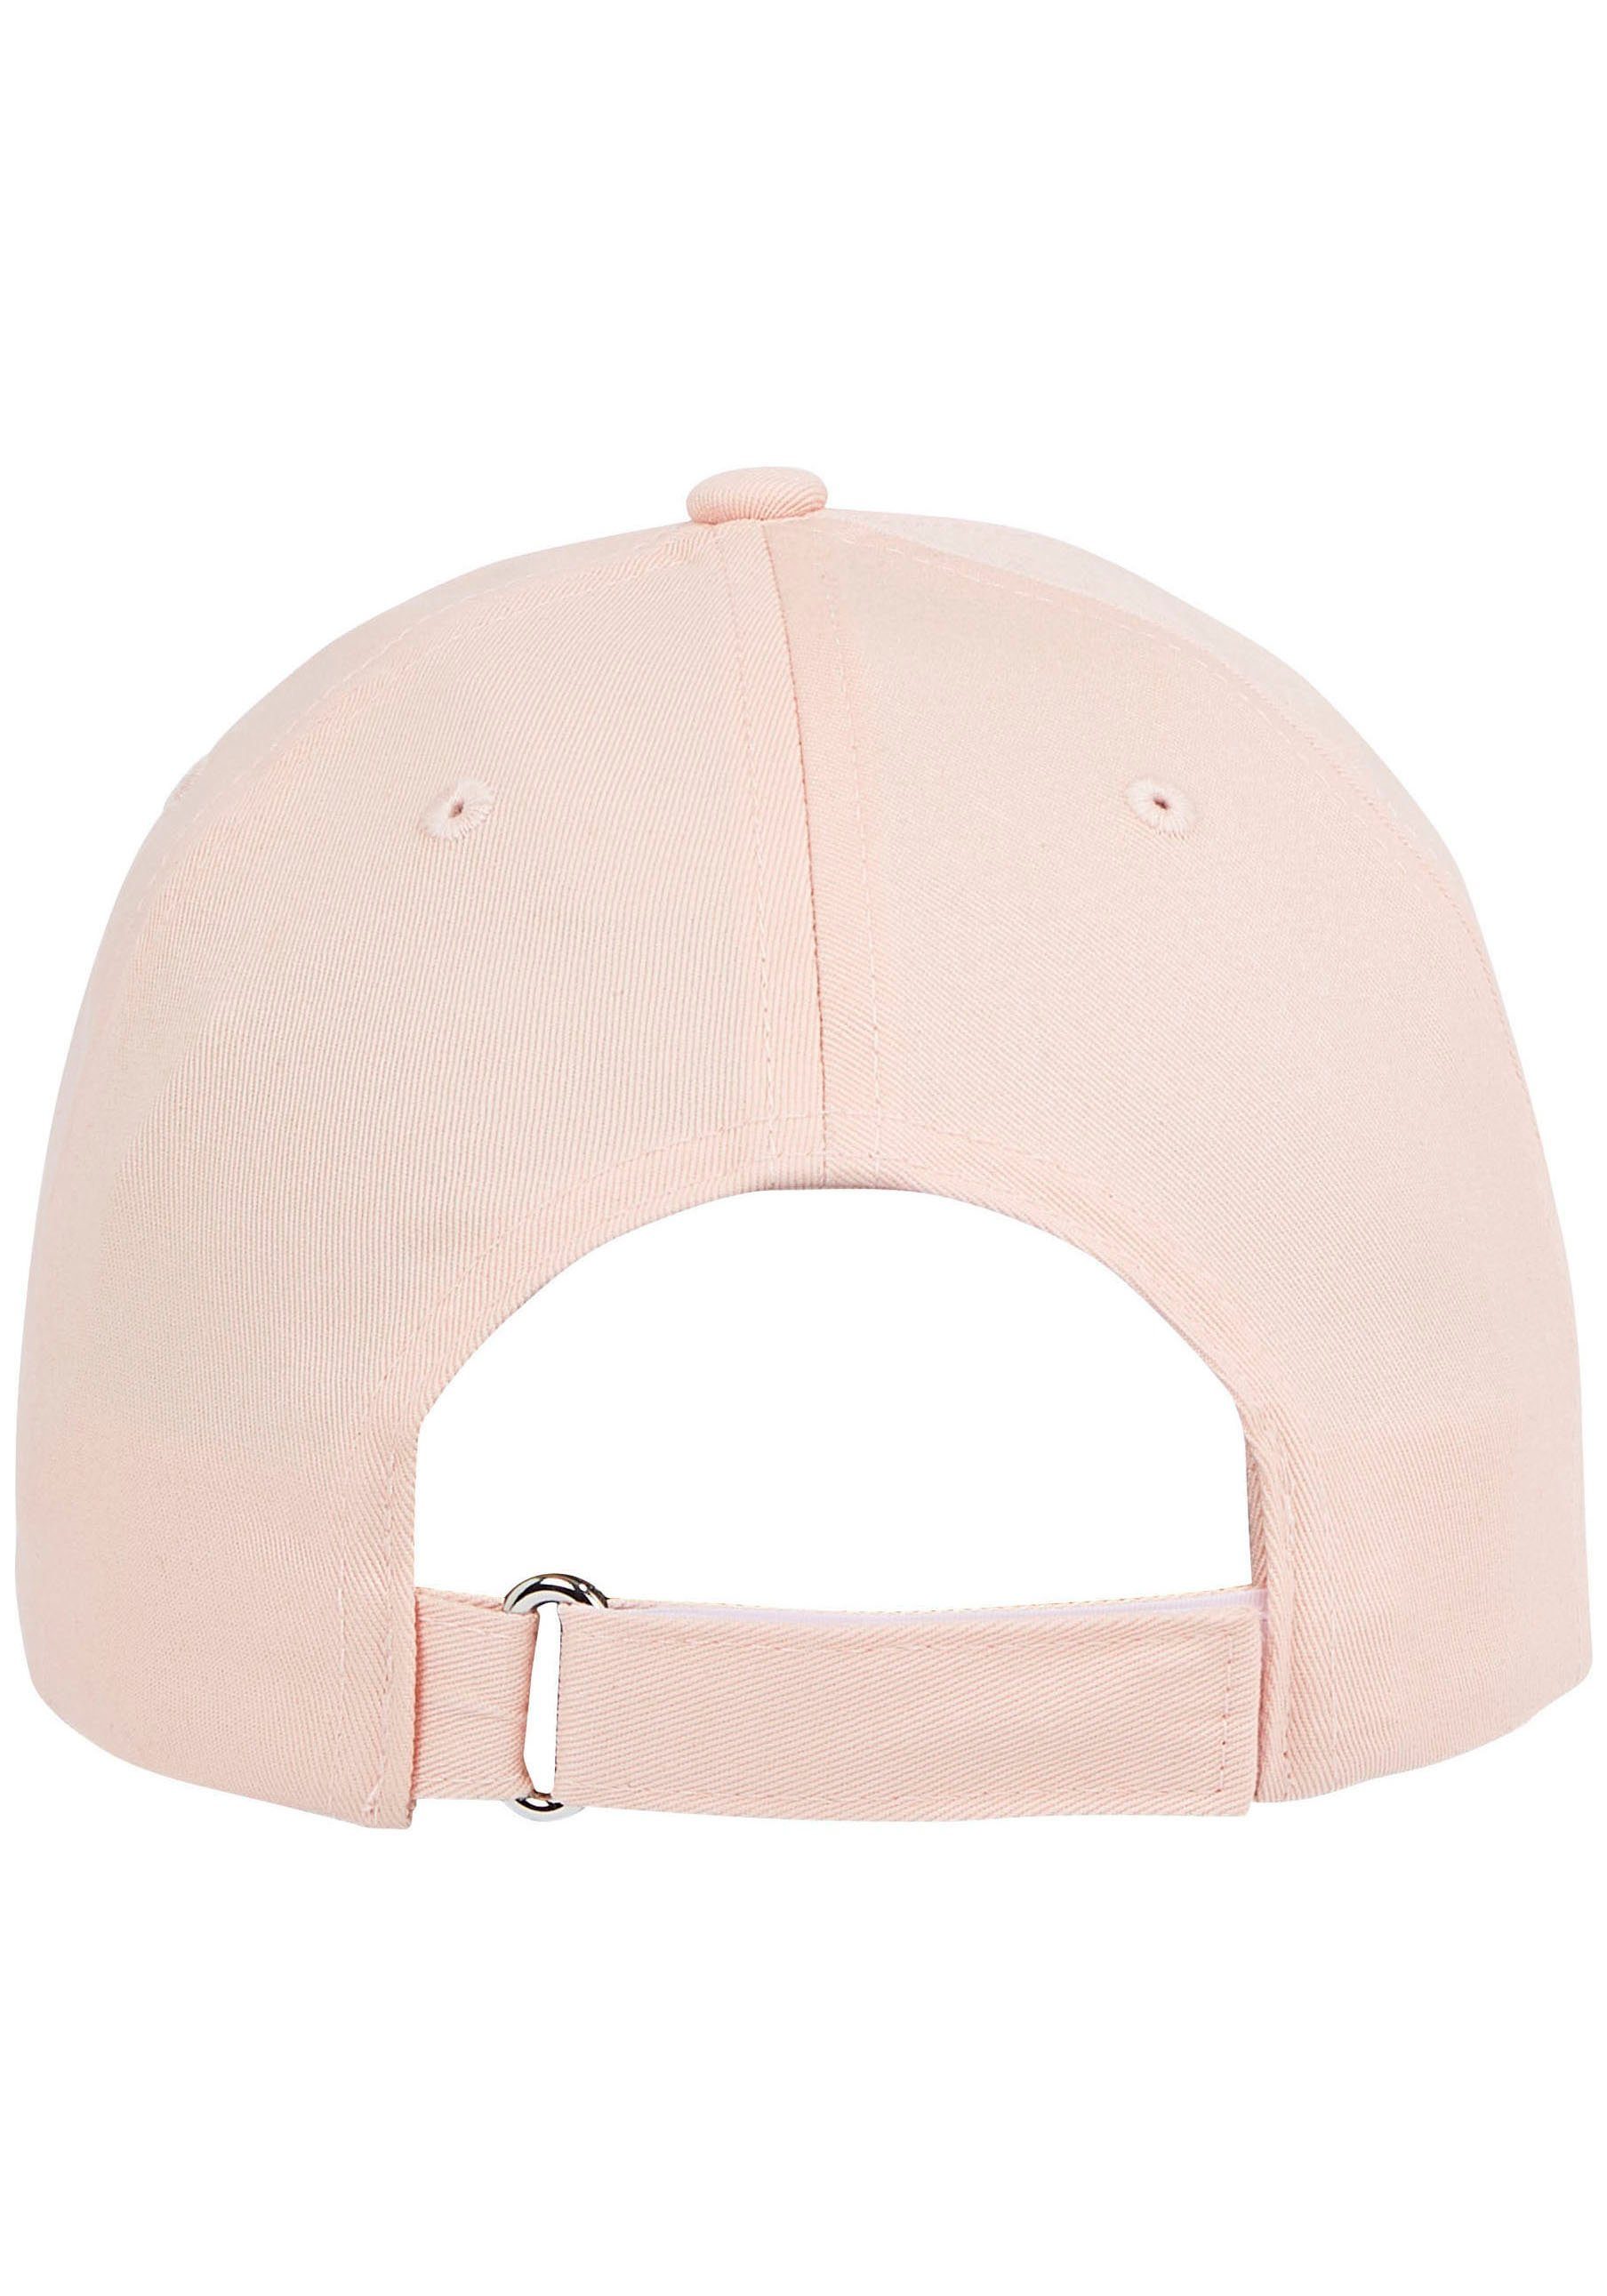 Pink CAP Branding Baseball dezentem Cap TOMMY Hilfiger Sepia Tommy TWIST mit